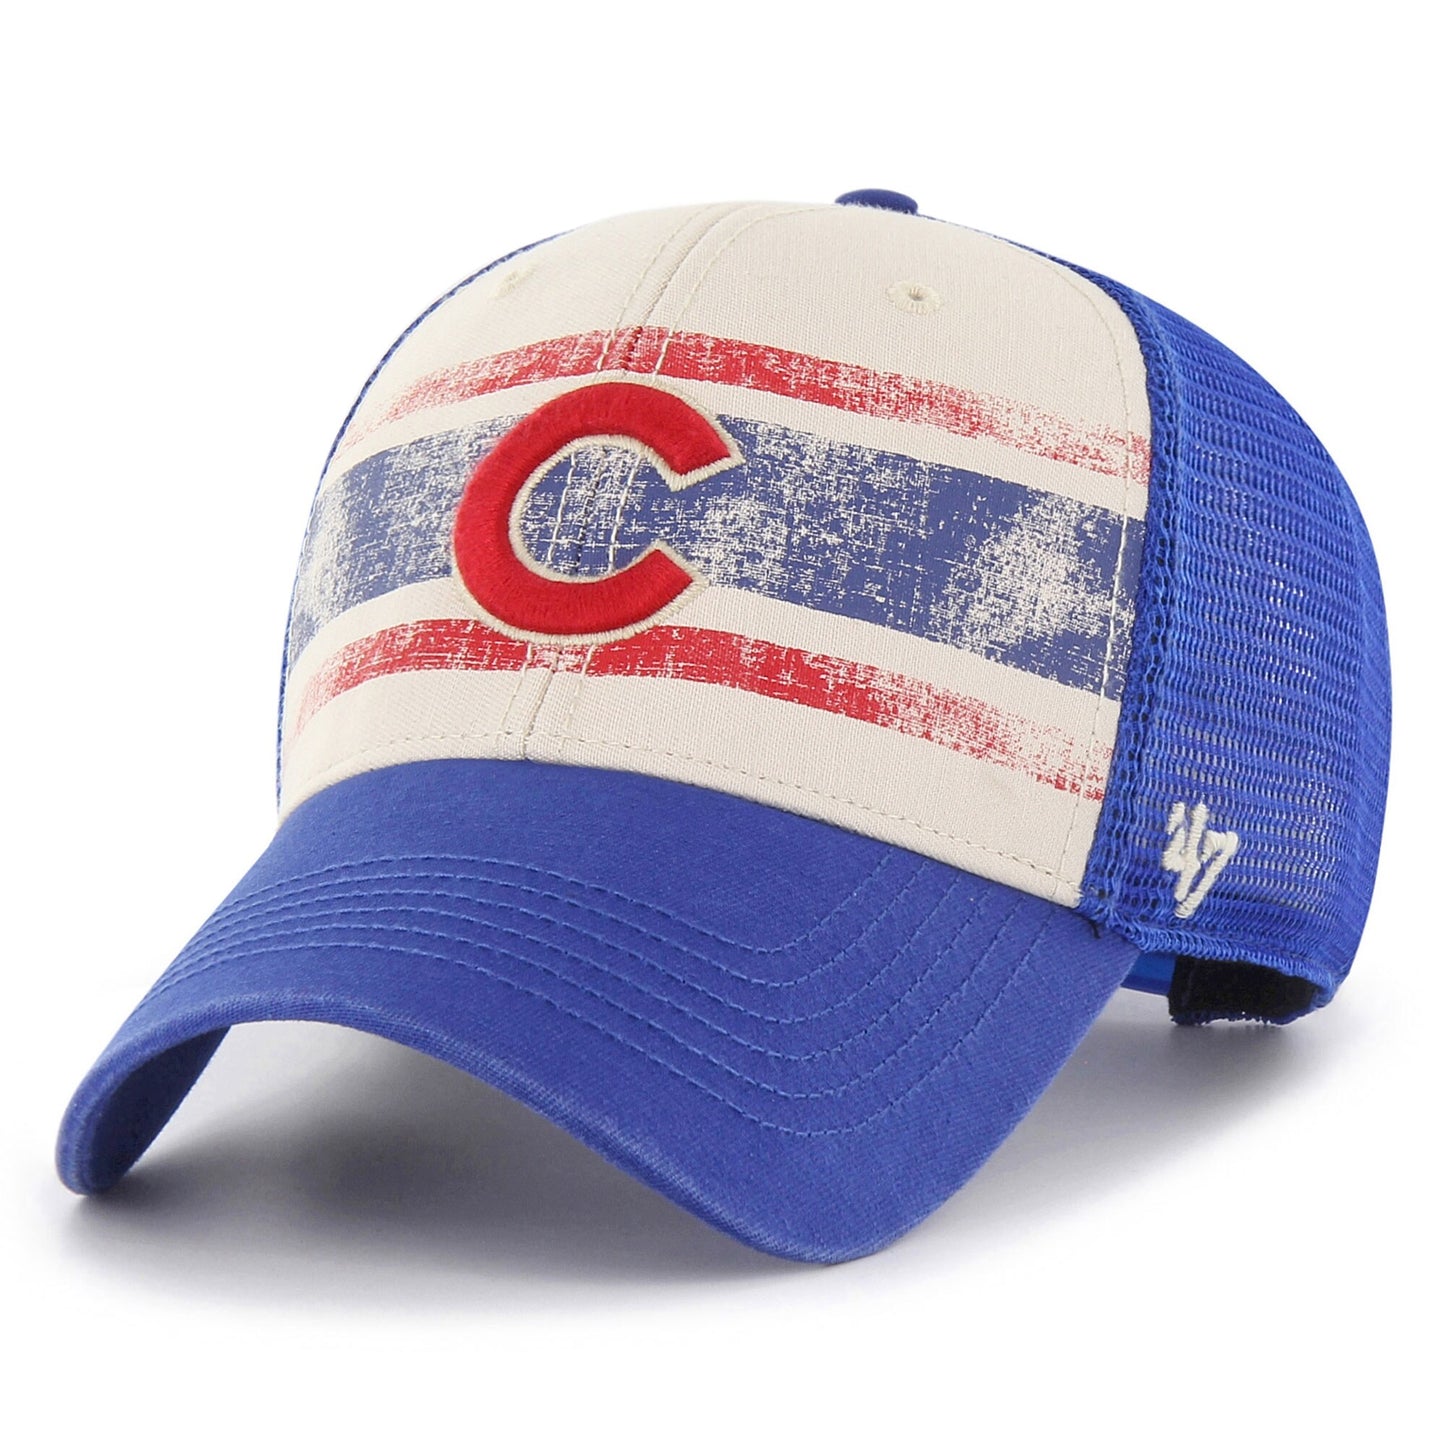 Chicago Cubs '47 Breakout MVP Trucker Adjustable Hat - Royal